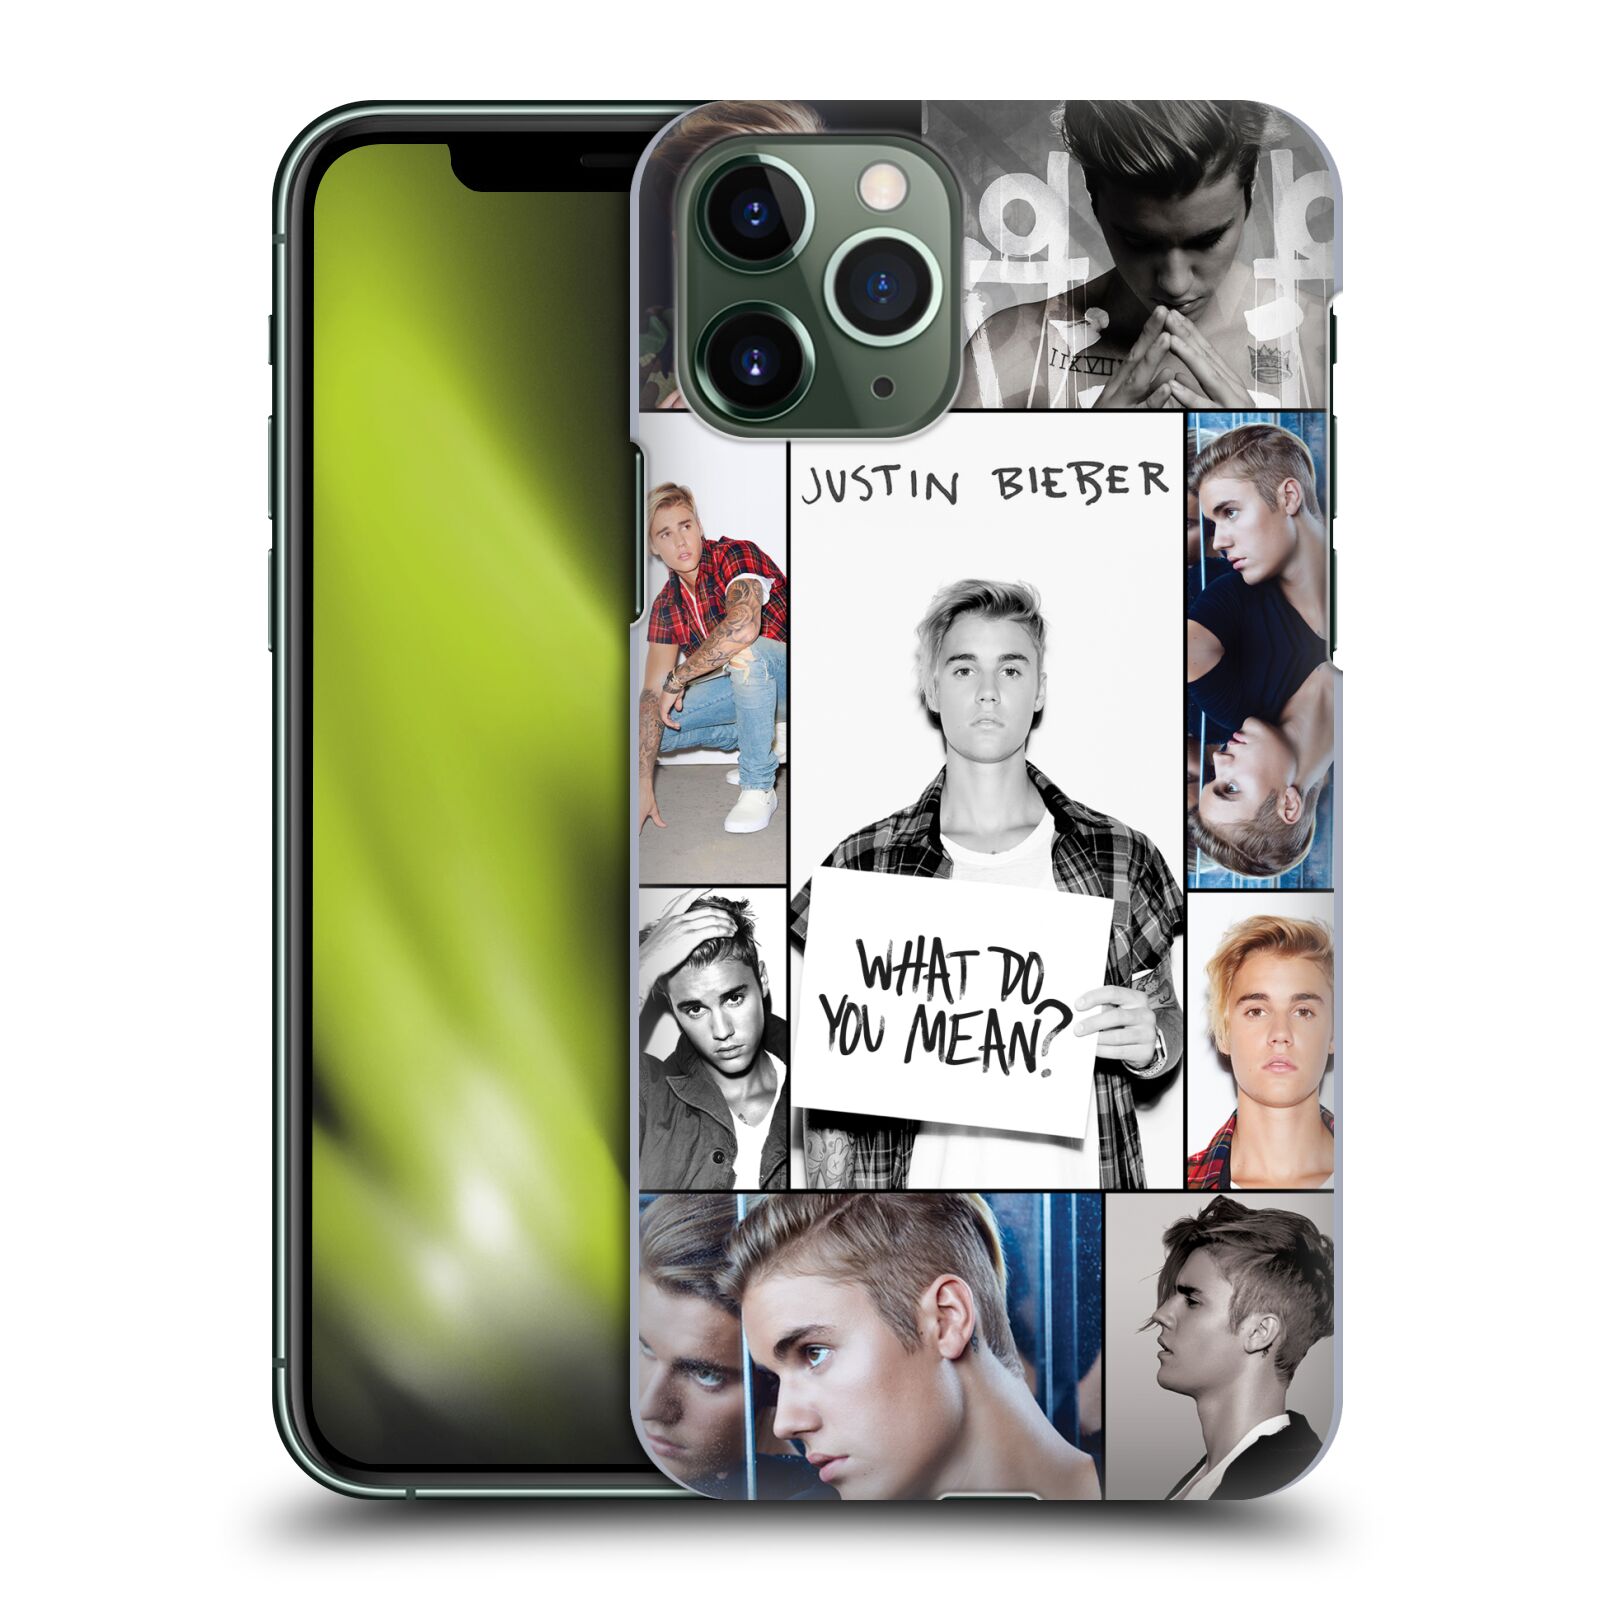 Pouzdro na mobil Apple Iphone 11 PRO - HEAD CASE - Justin Bieber foto Purpose malé fotky